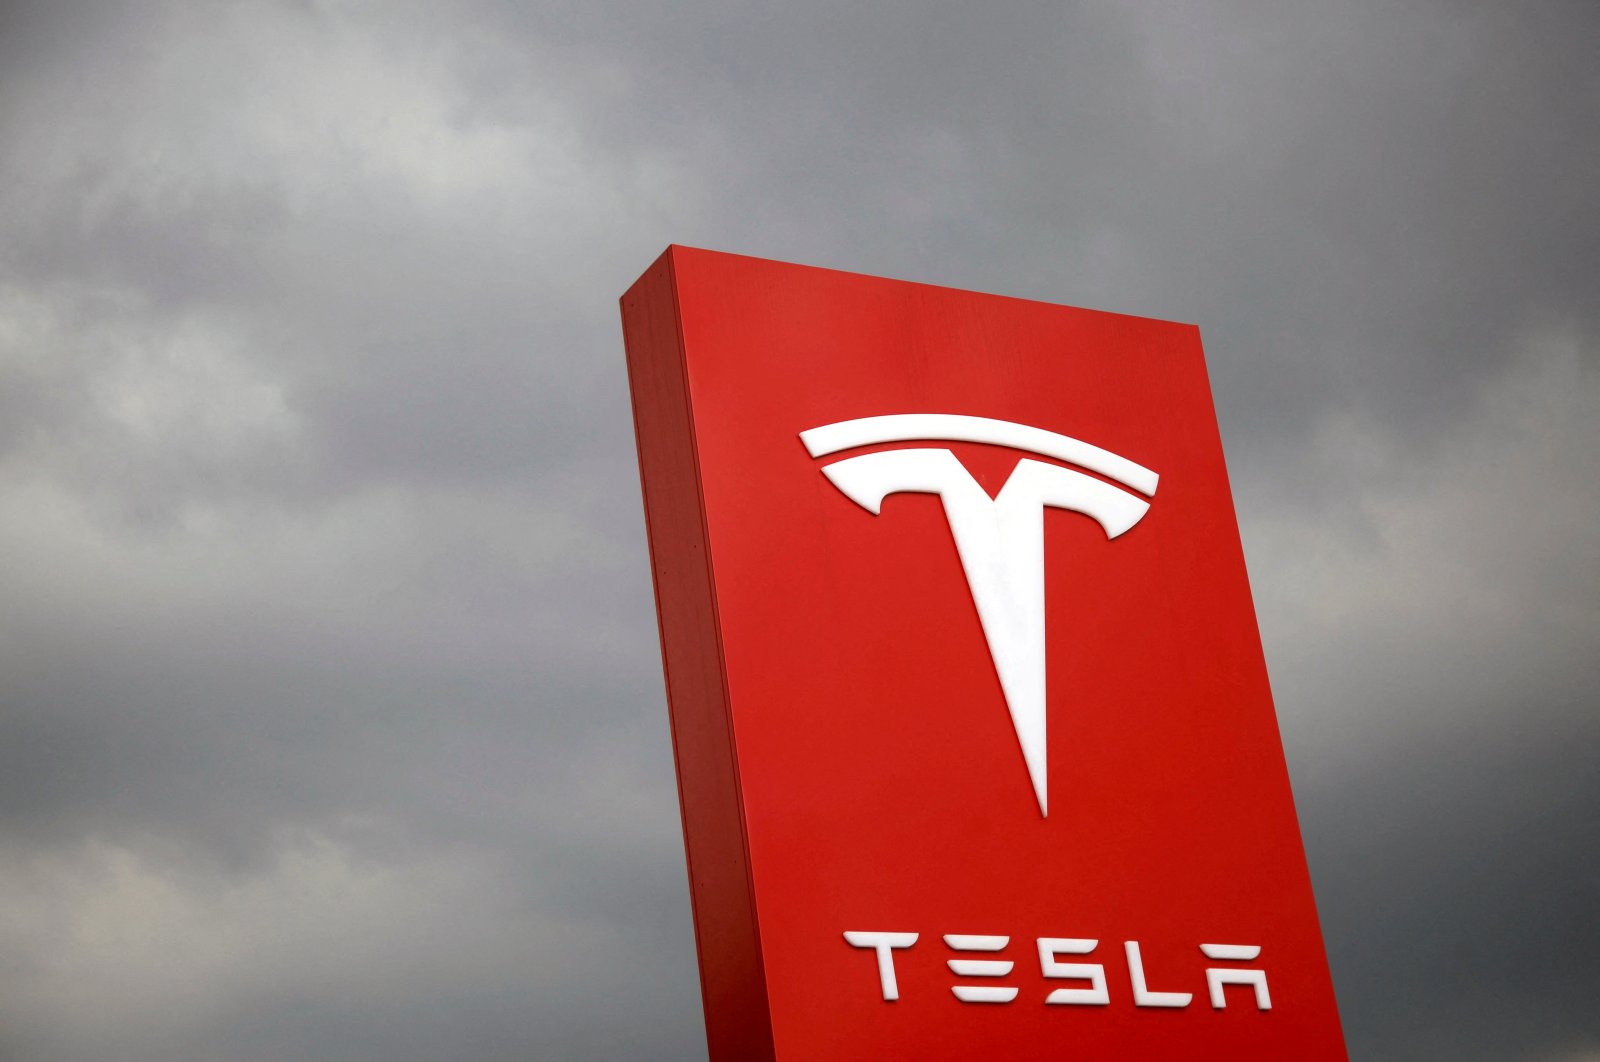 The logo of Tesla is seen in Taipei, Taiwan, Aug. 11, 2017. (Reuters Photo)